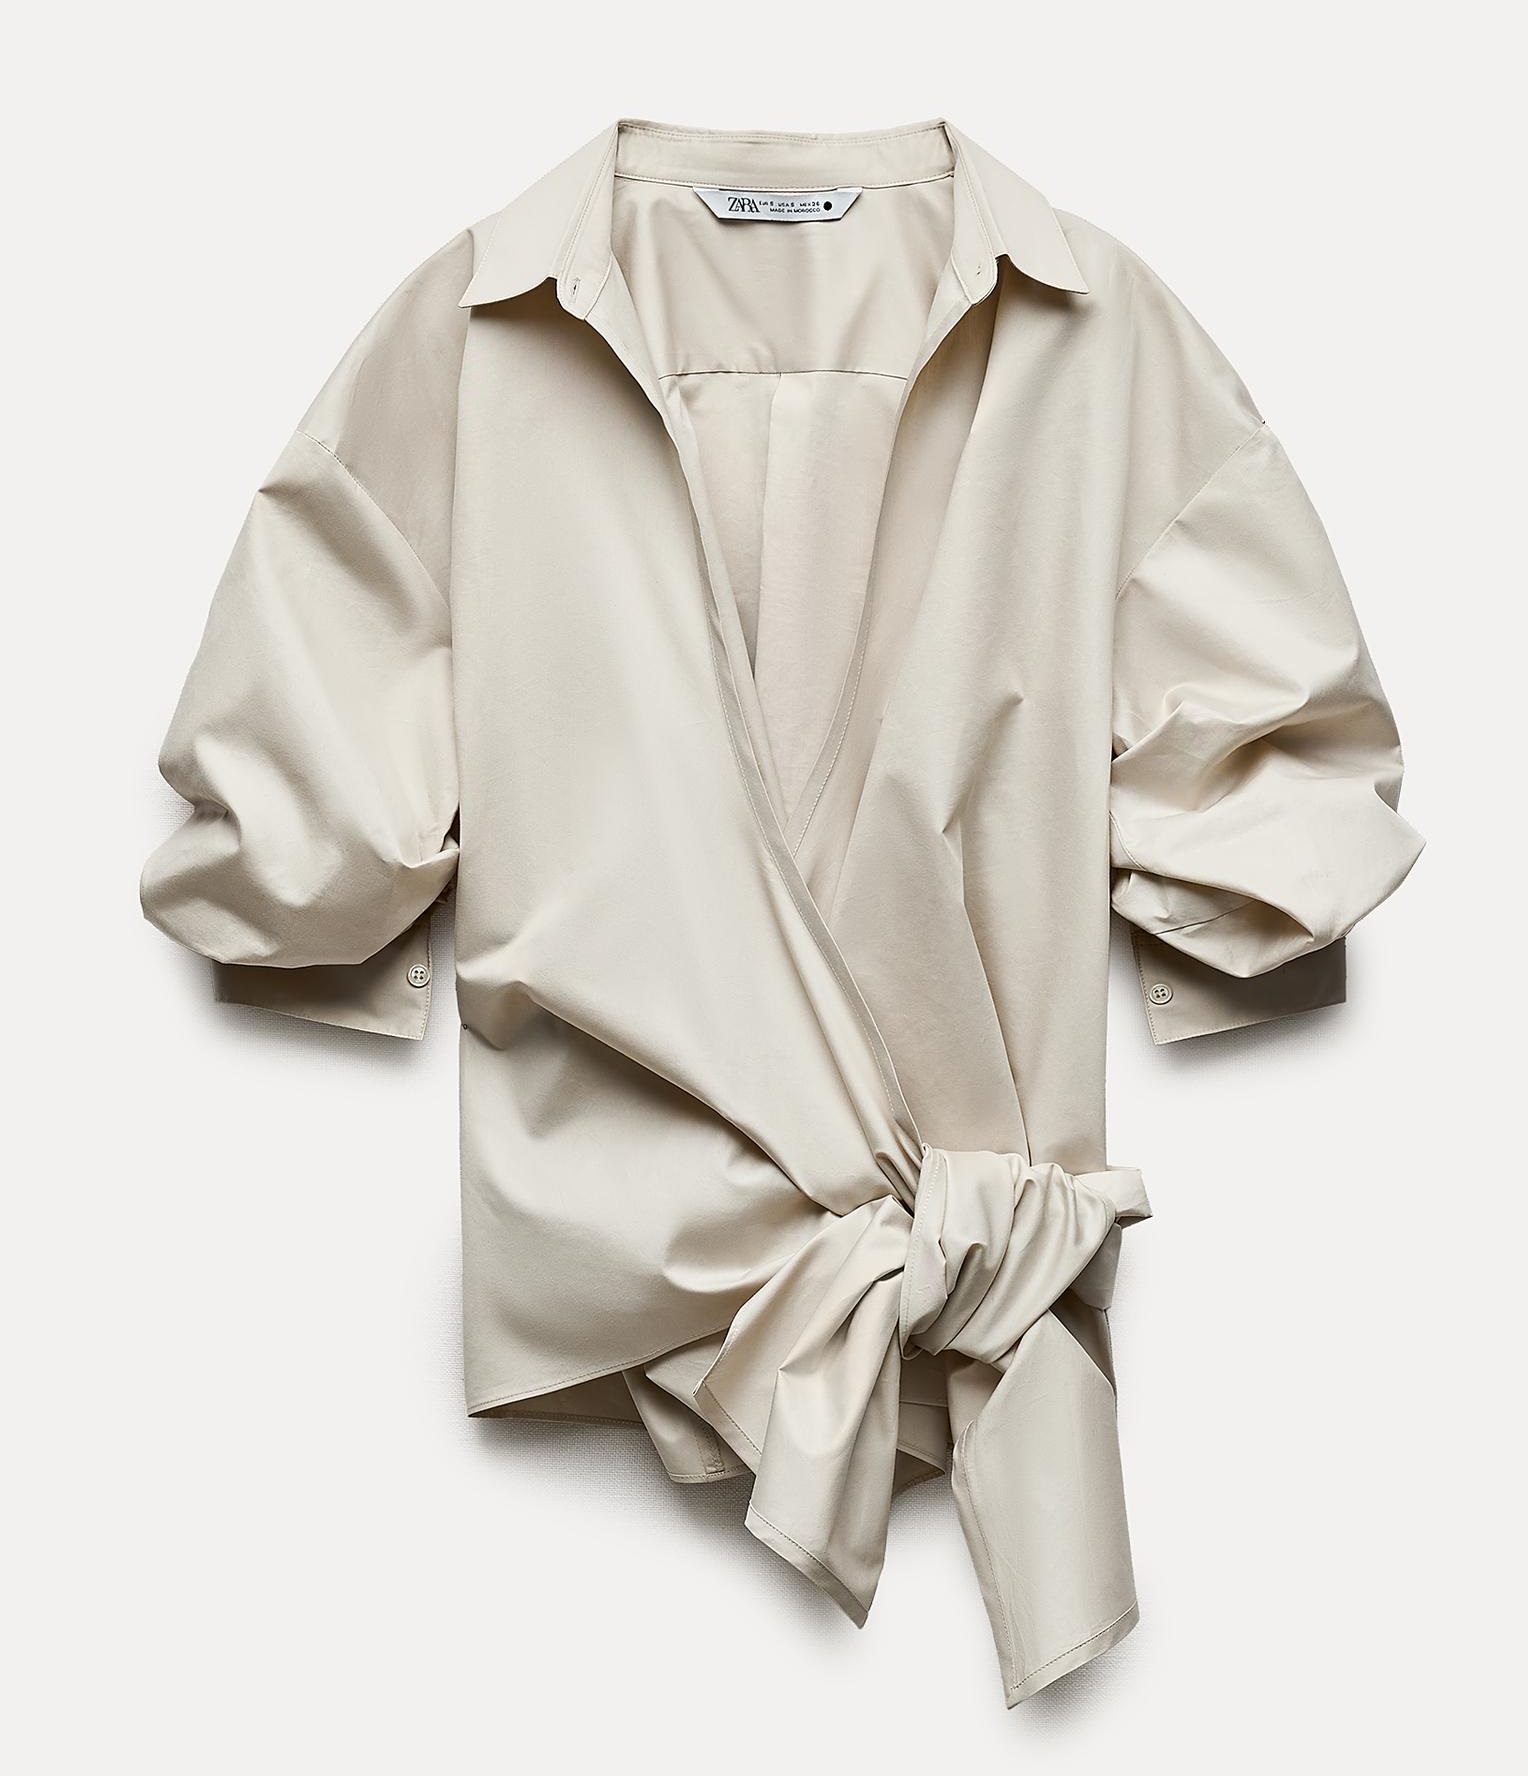 Рубашка Zara Zw Collection Crossover With Tie Detail, бежевый рубашка zara with bib detail белый